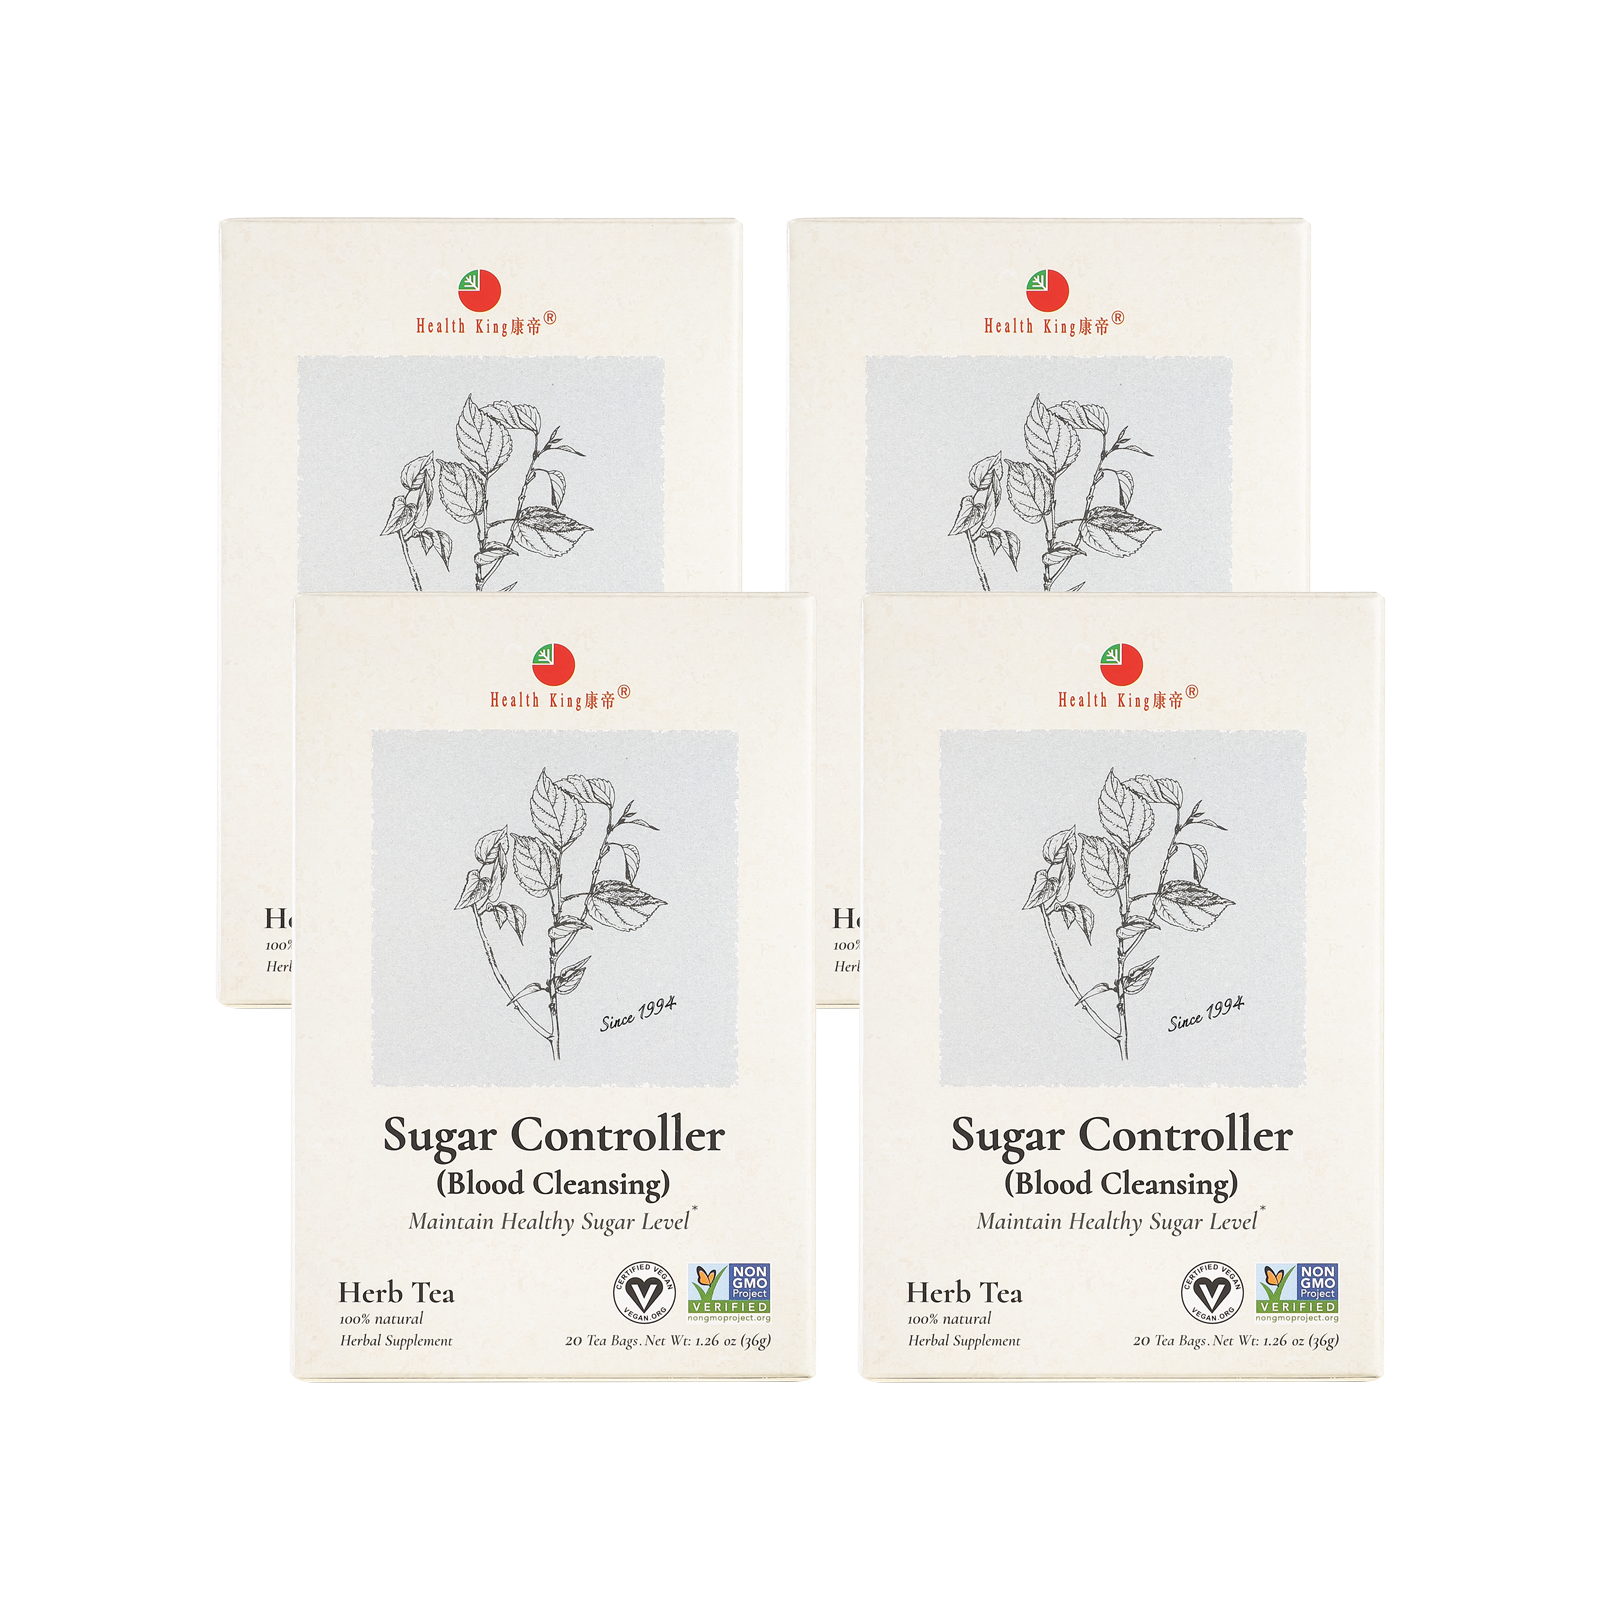 Four boxes of Sugar Controller Herb Tea, formulated for blood sugar regulation